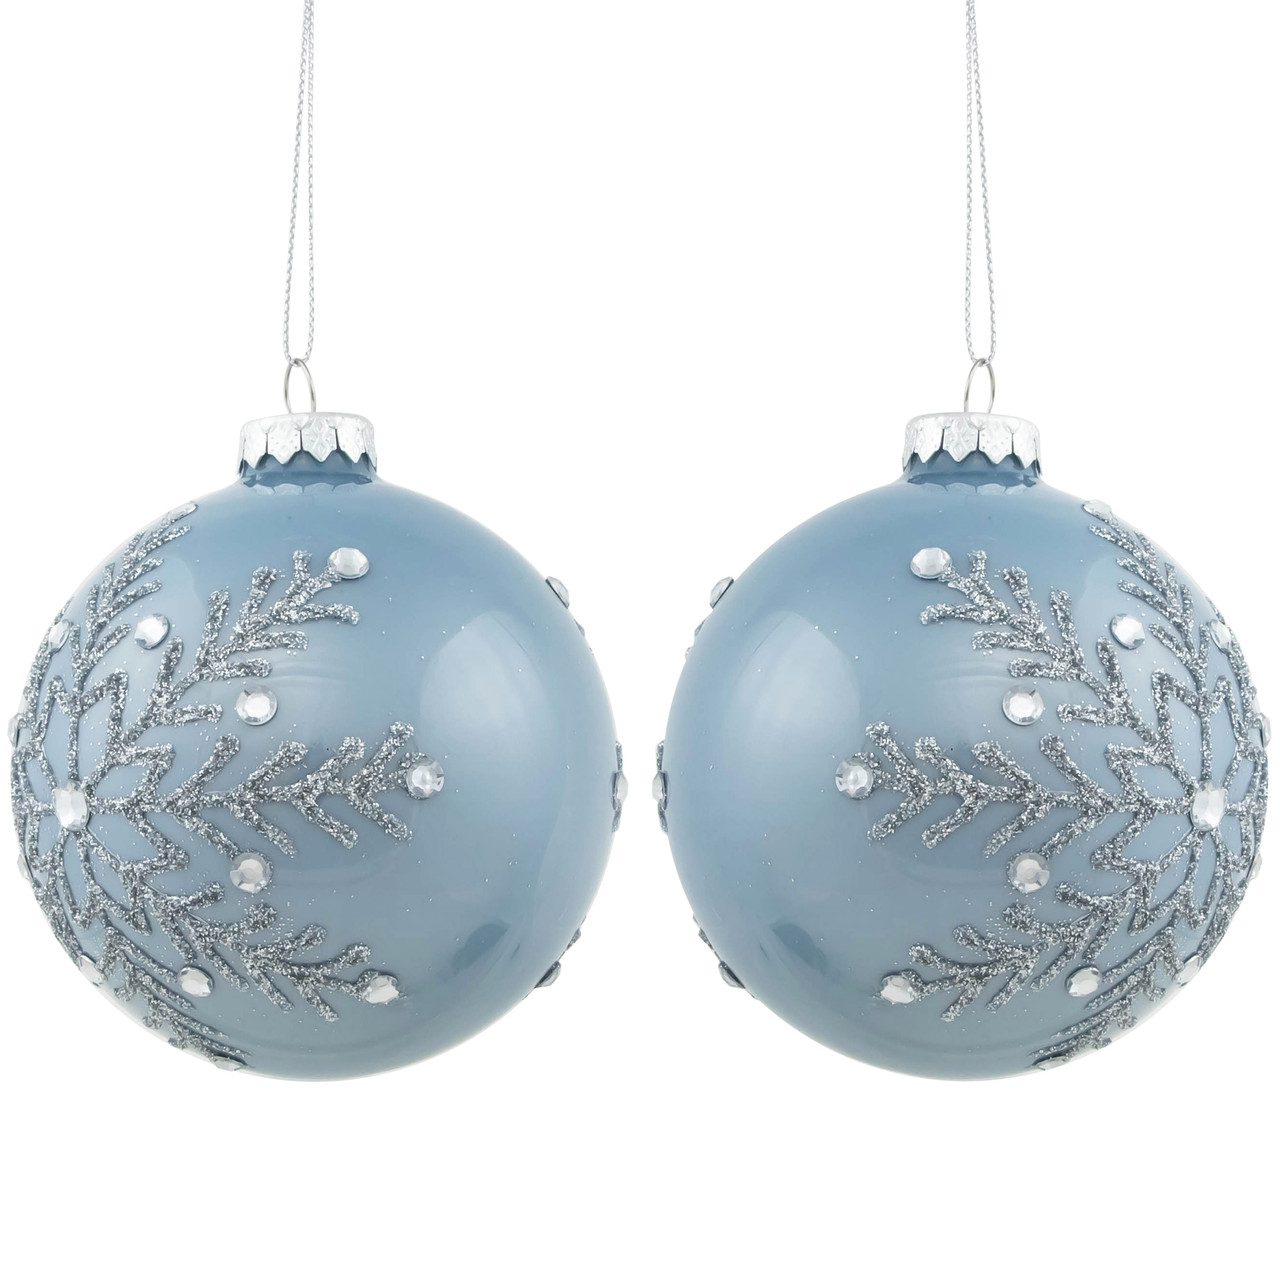 Glitter Christmas Ornaments Decorative Snowflake Ornament 2D